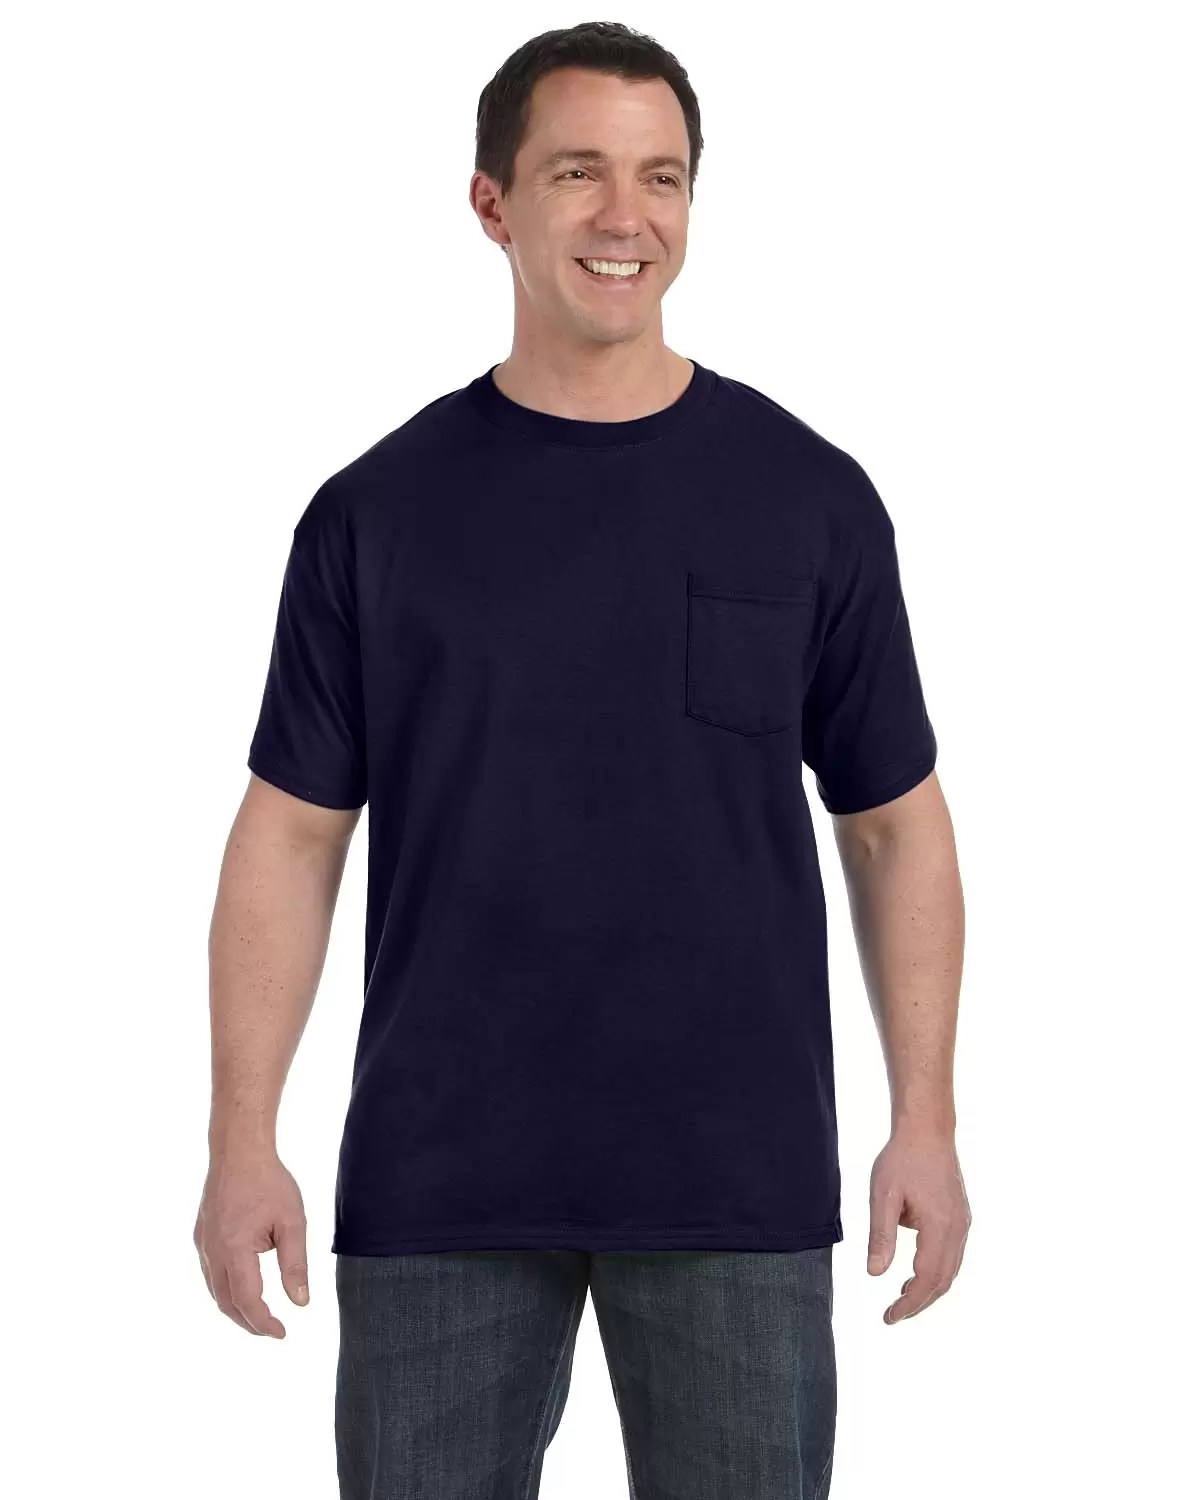 Litteratur Visum Læge 5590 Hanes® Pocket Tagless 6.1 T-shirt - 5590 - From $3.28